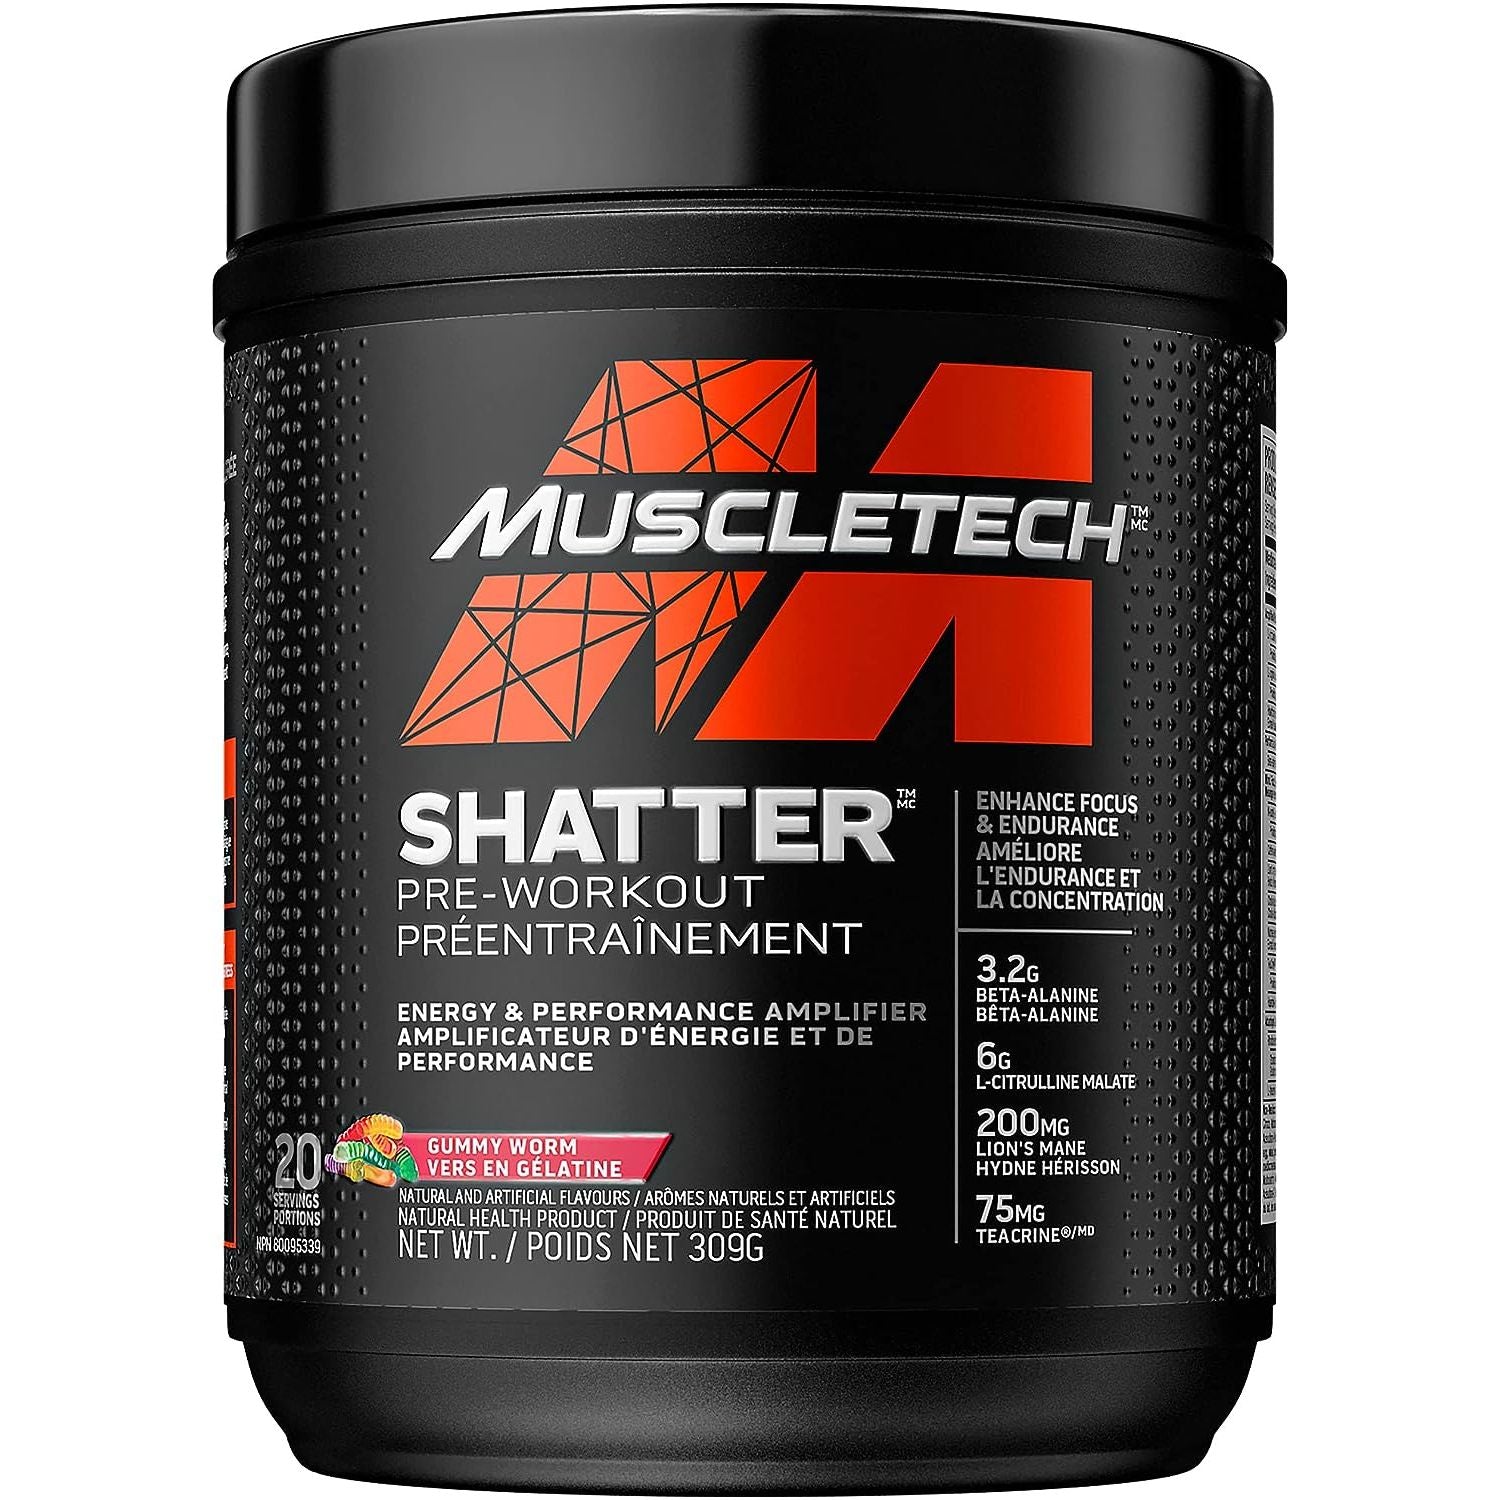 Muscletech Shatter Pre-Workout (20 servings) Pre-workout Gummy Worm MuscleTech